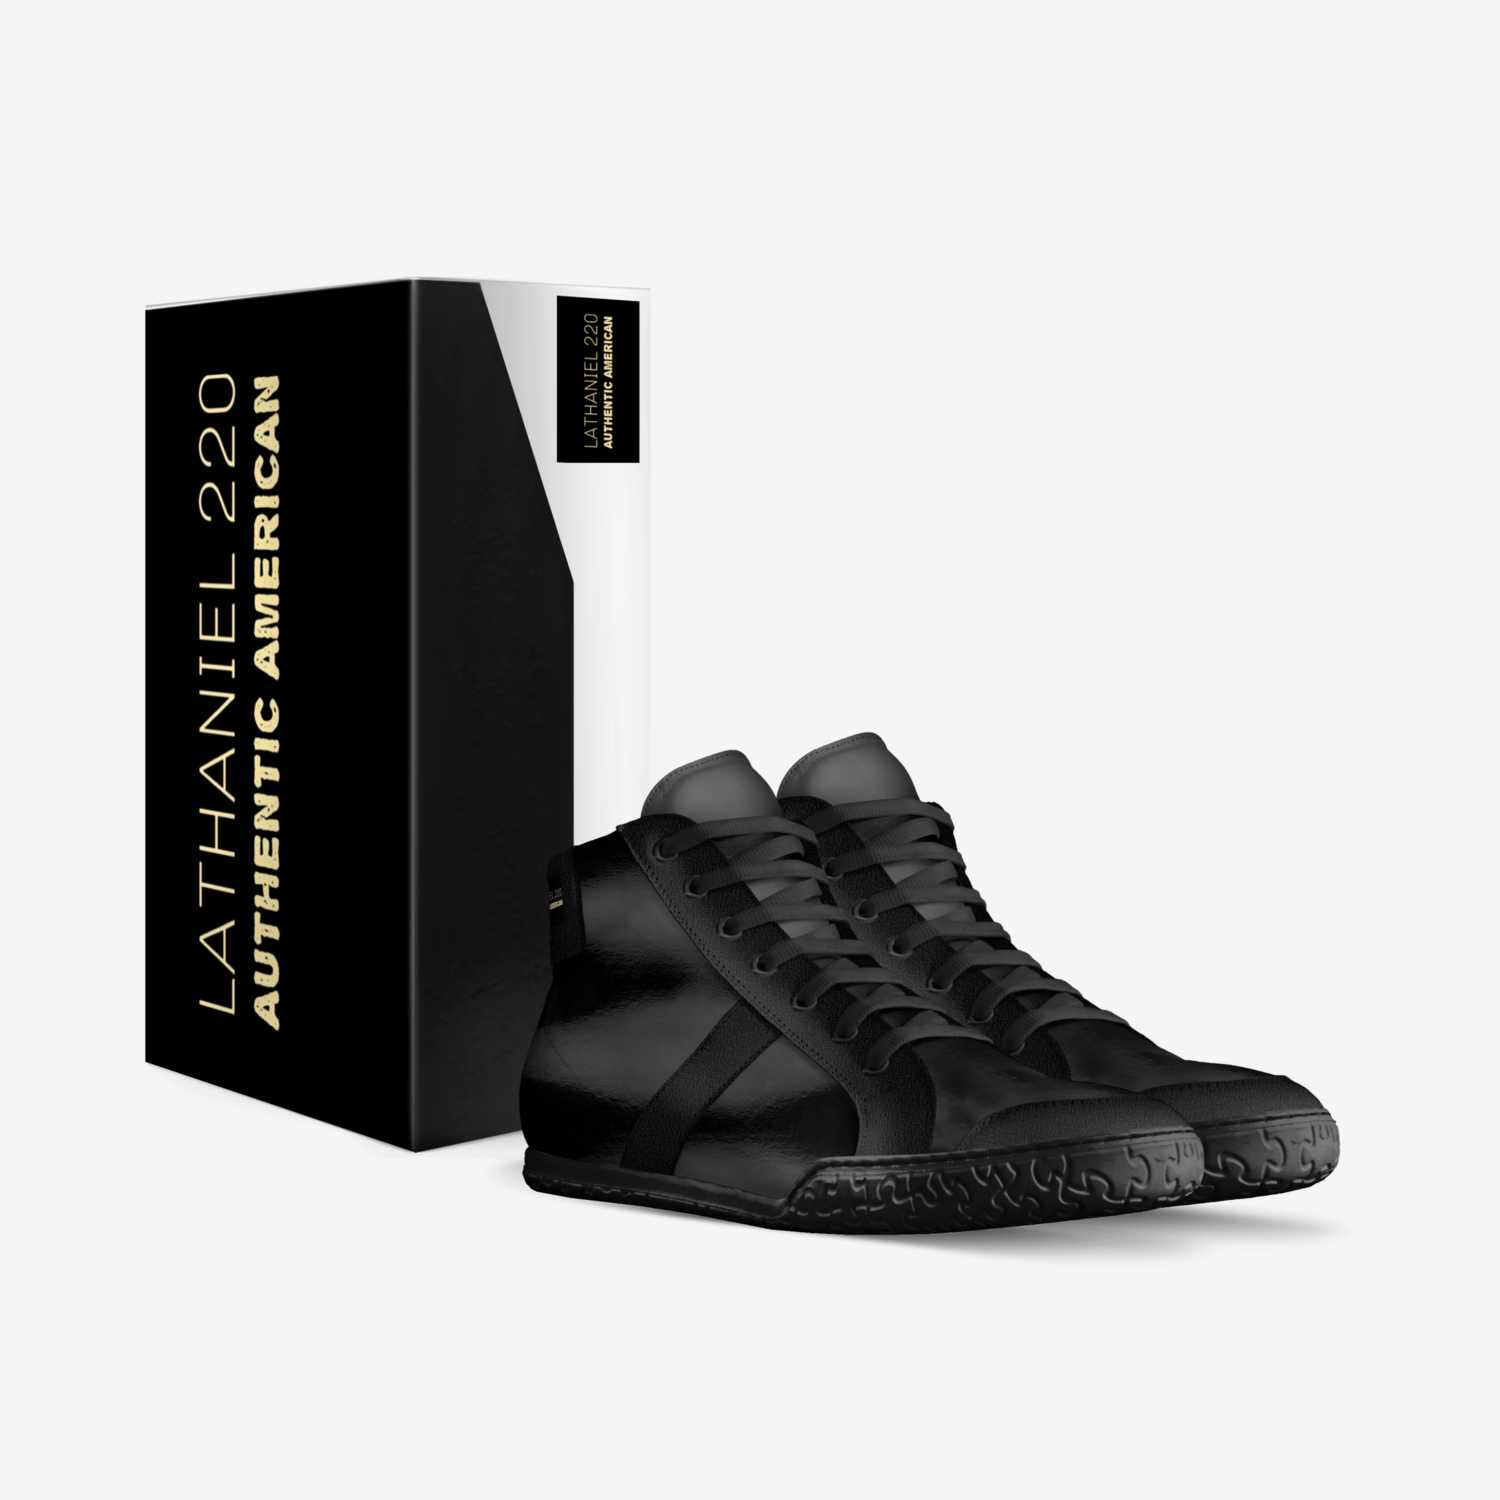 LATHANIEL 220 custom made in Italy shoes by John Steward | Box view